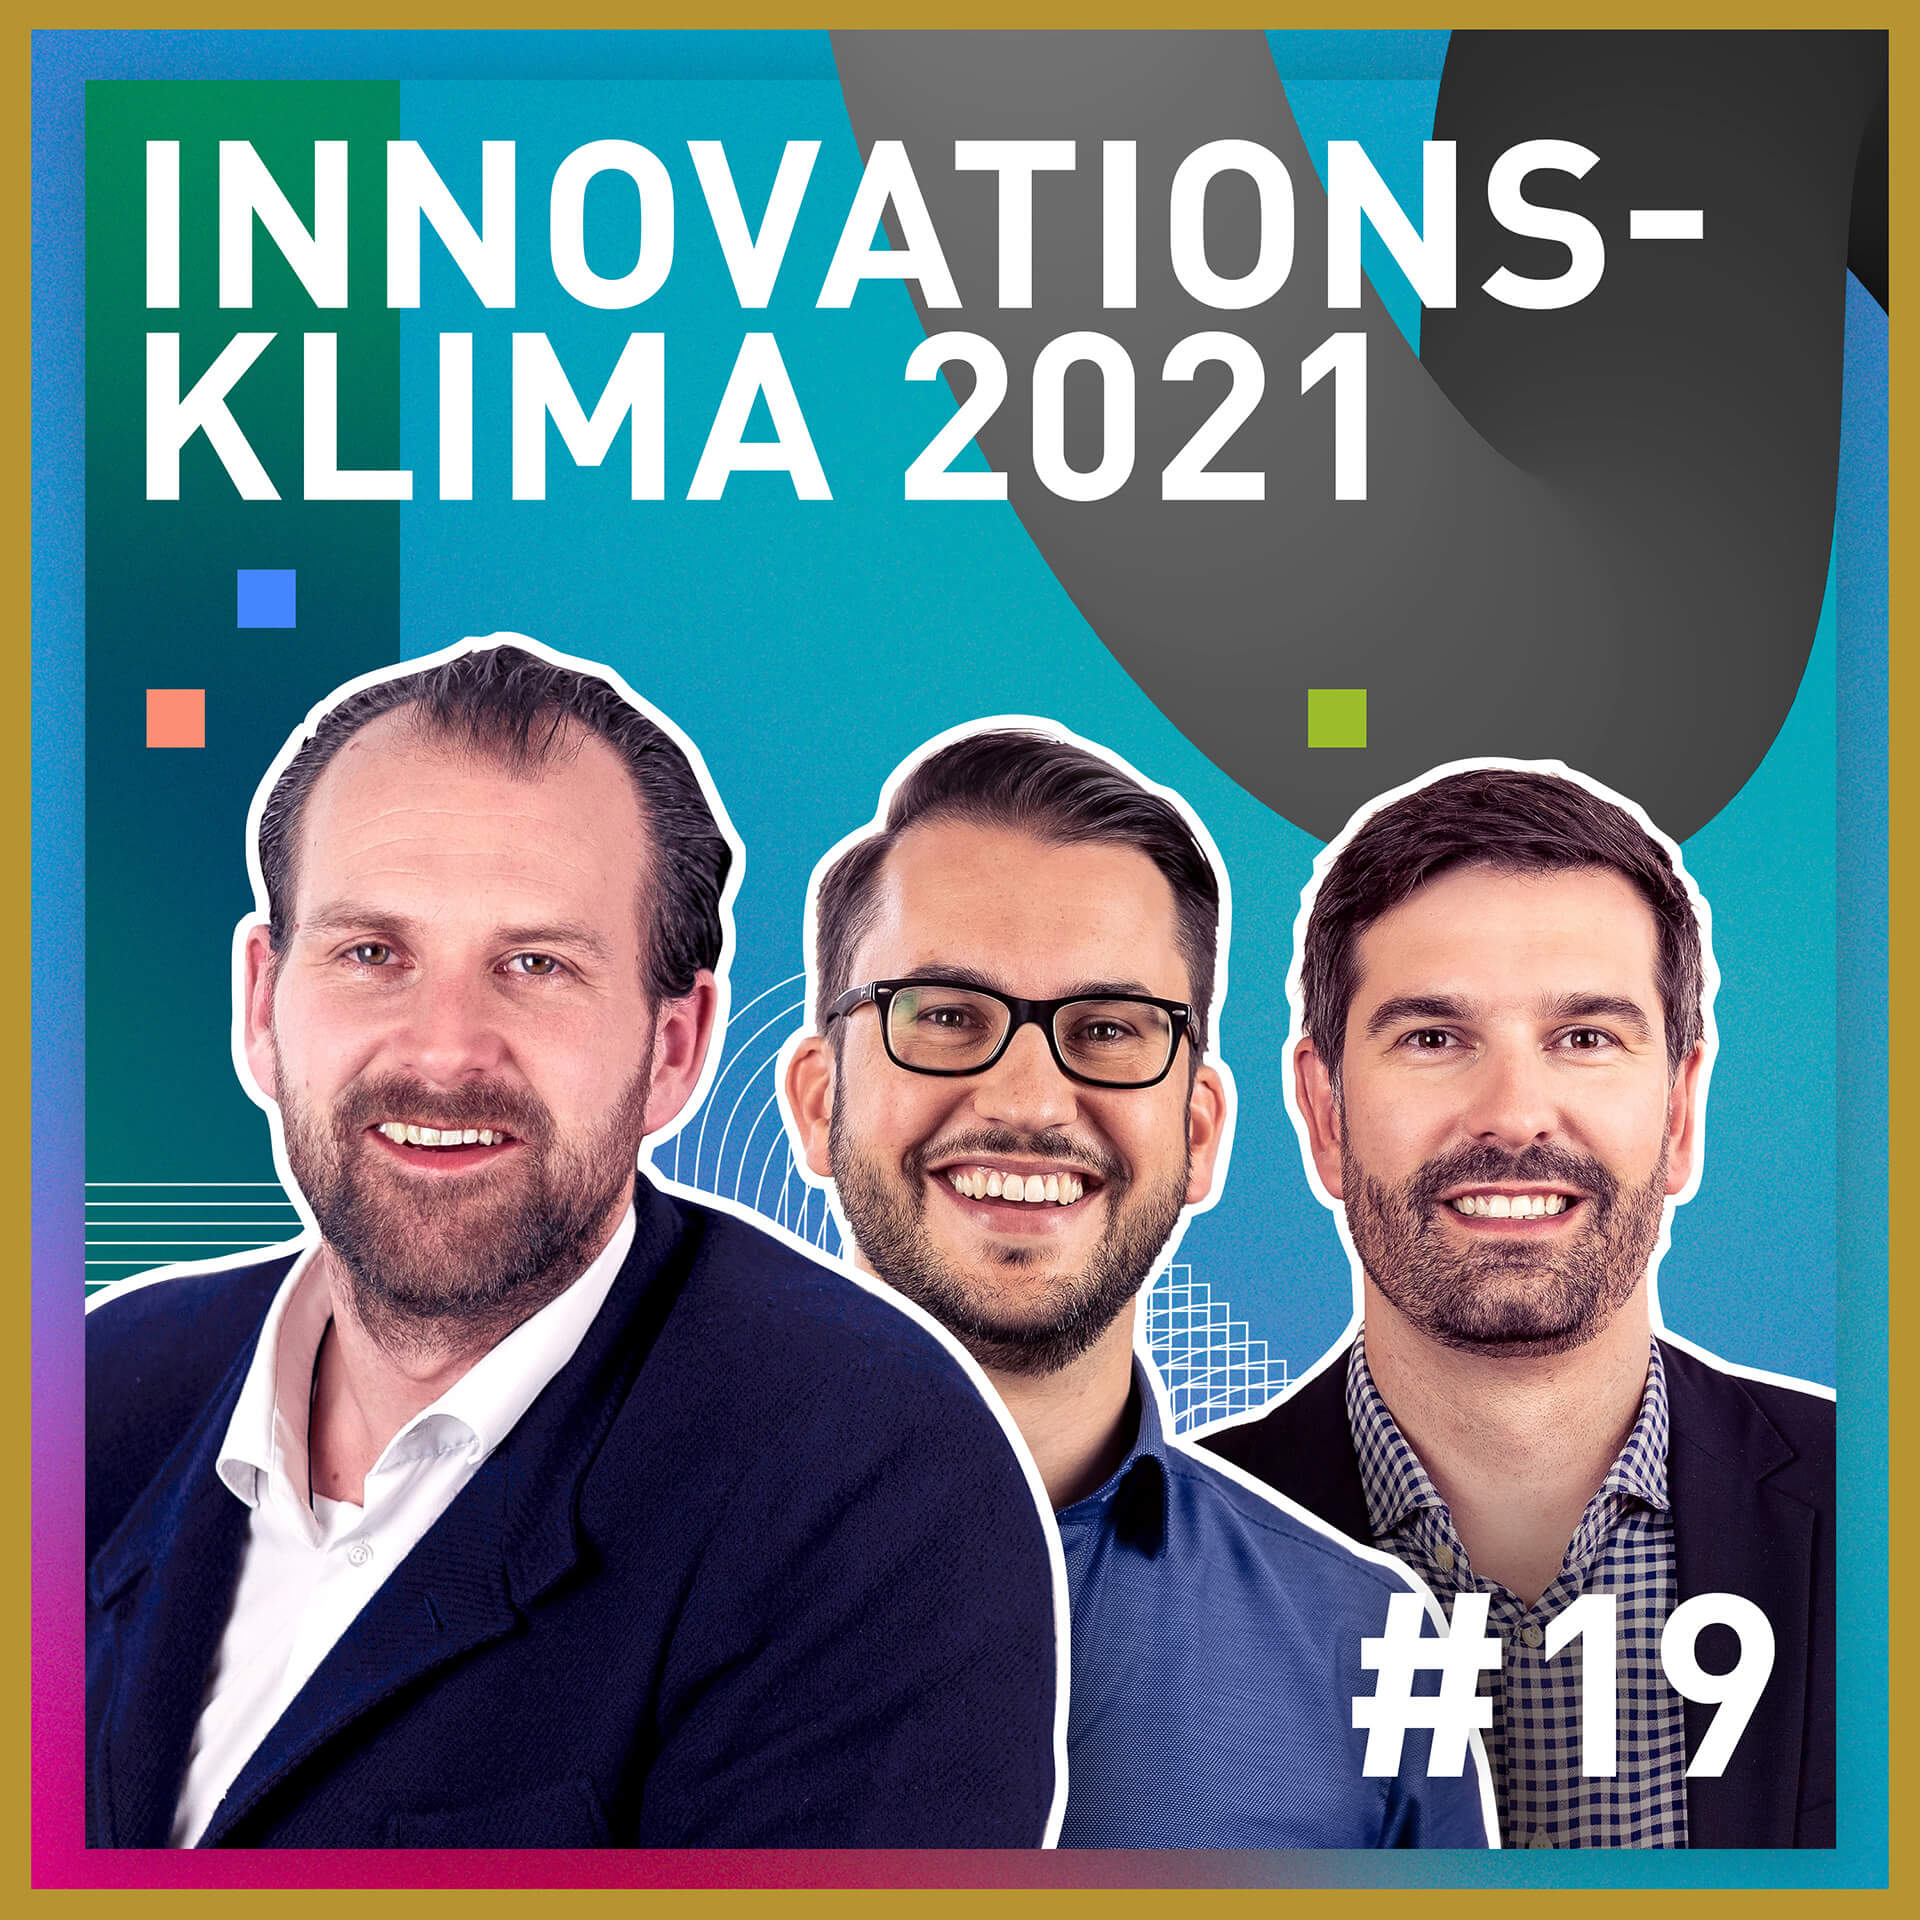 TRENDONE Podcast "Innovation geht anders" #19 Innovationsklima 2021 mit Sven Tollmien